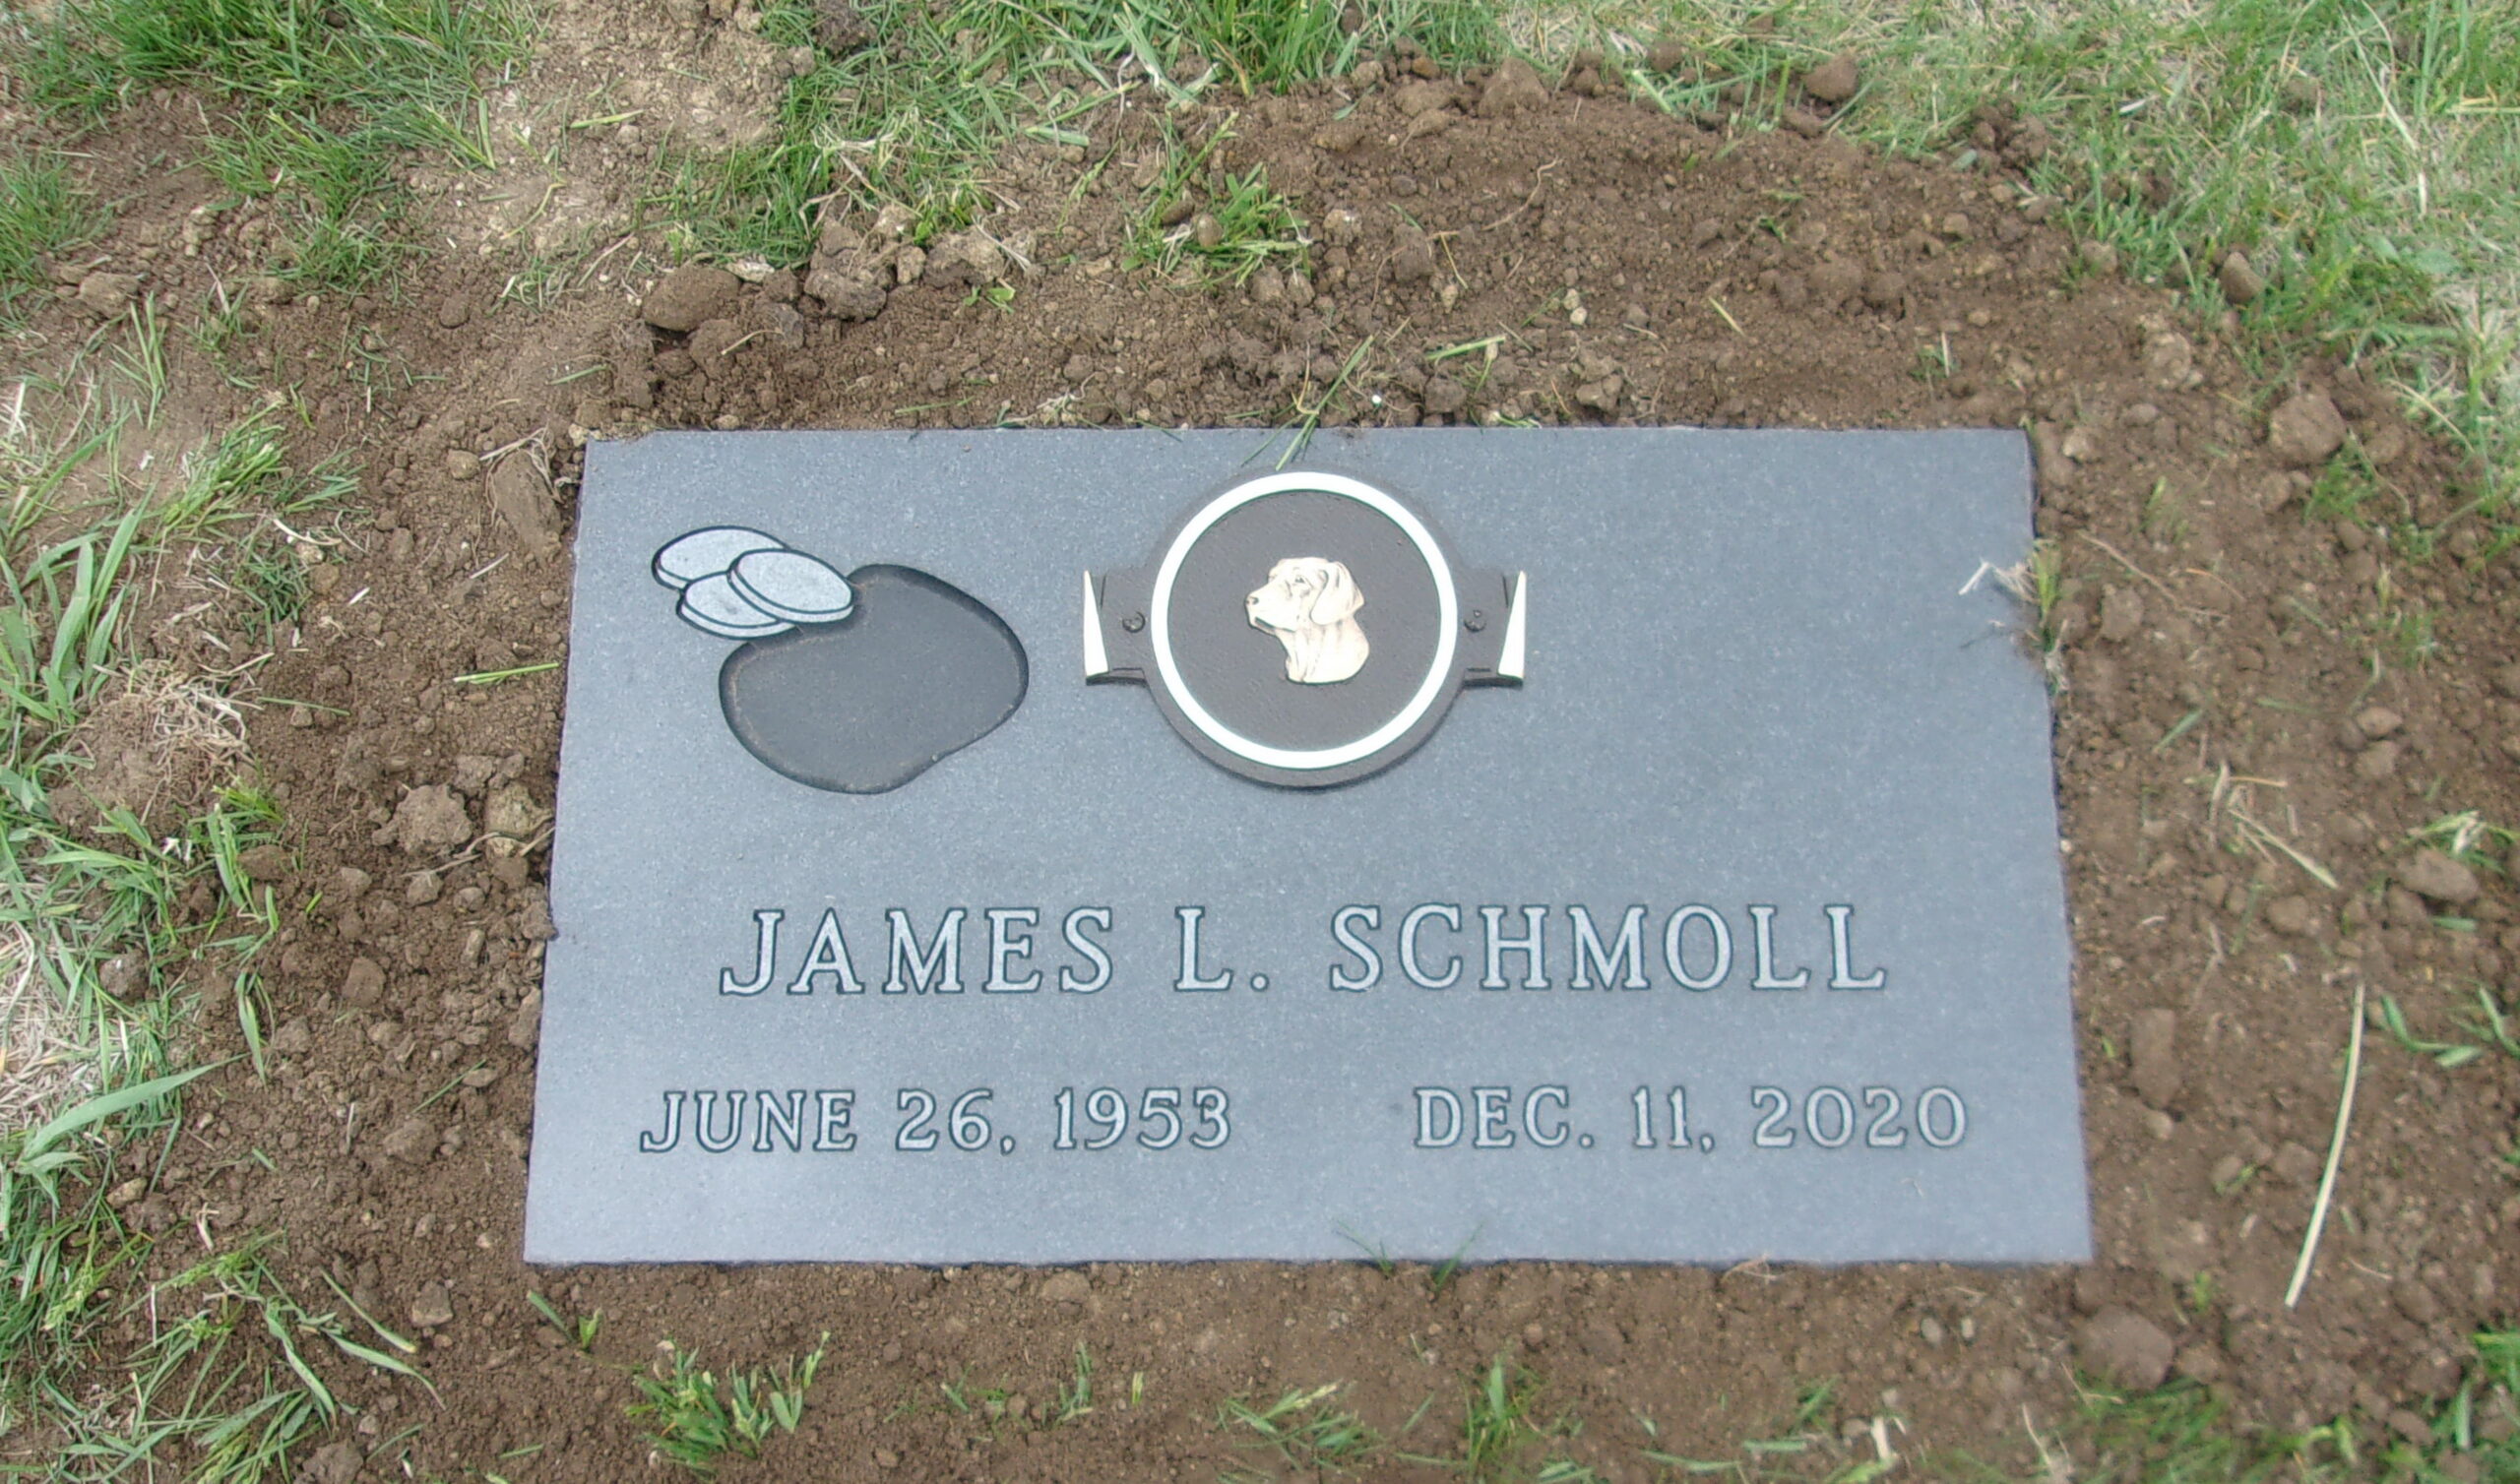 Schmoll Cremation Memorial